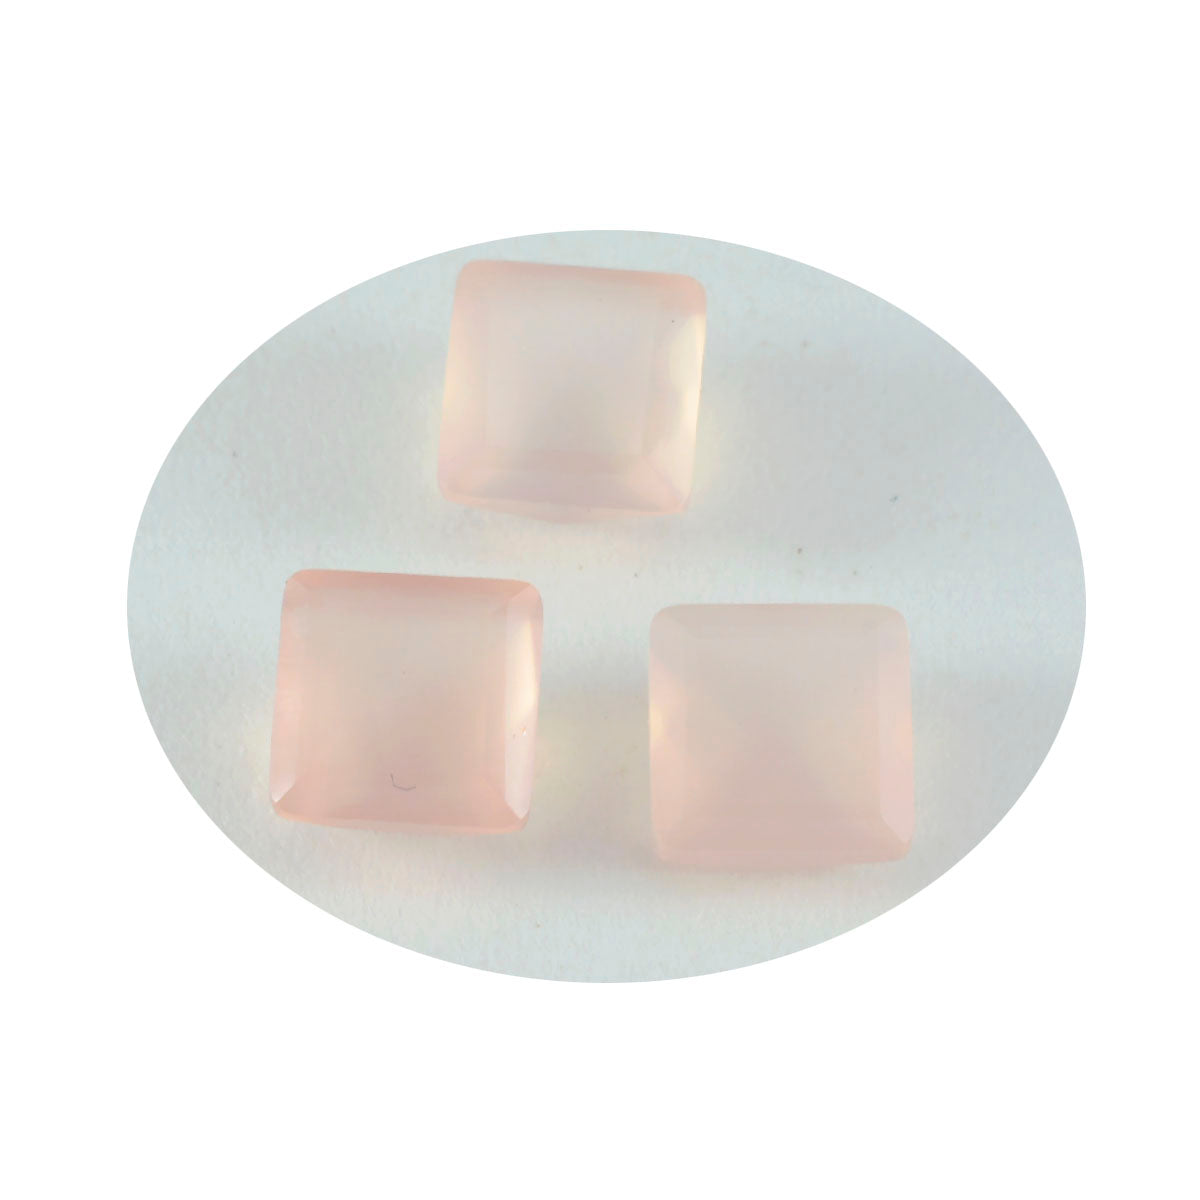 Riyogems 1PC Pink Rose Quartz Faceted 14x14 mm Square Shape awesome Quality Gem